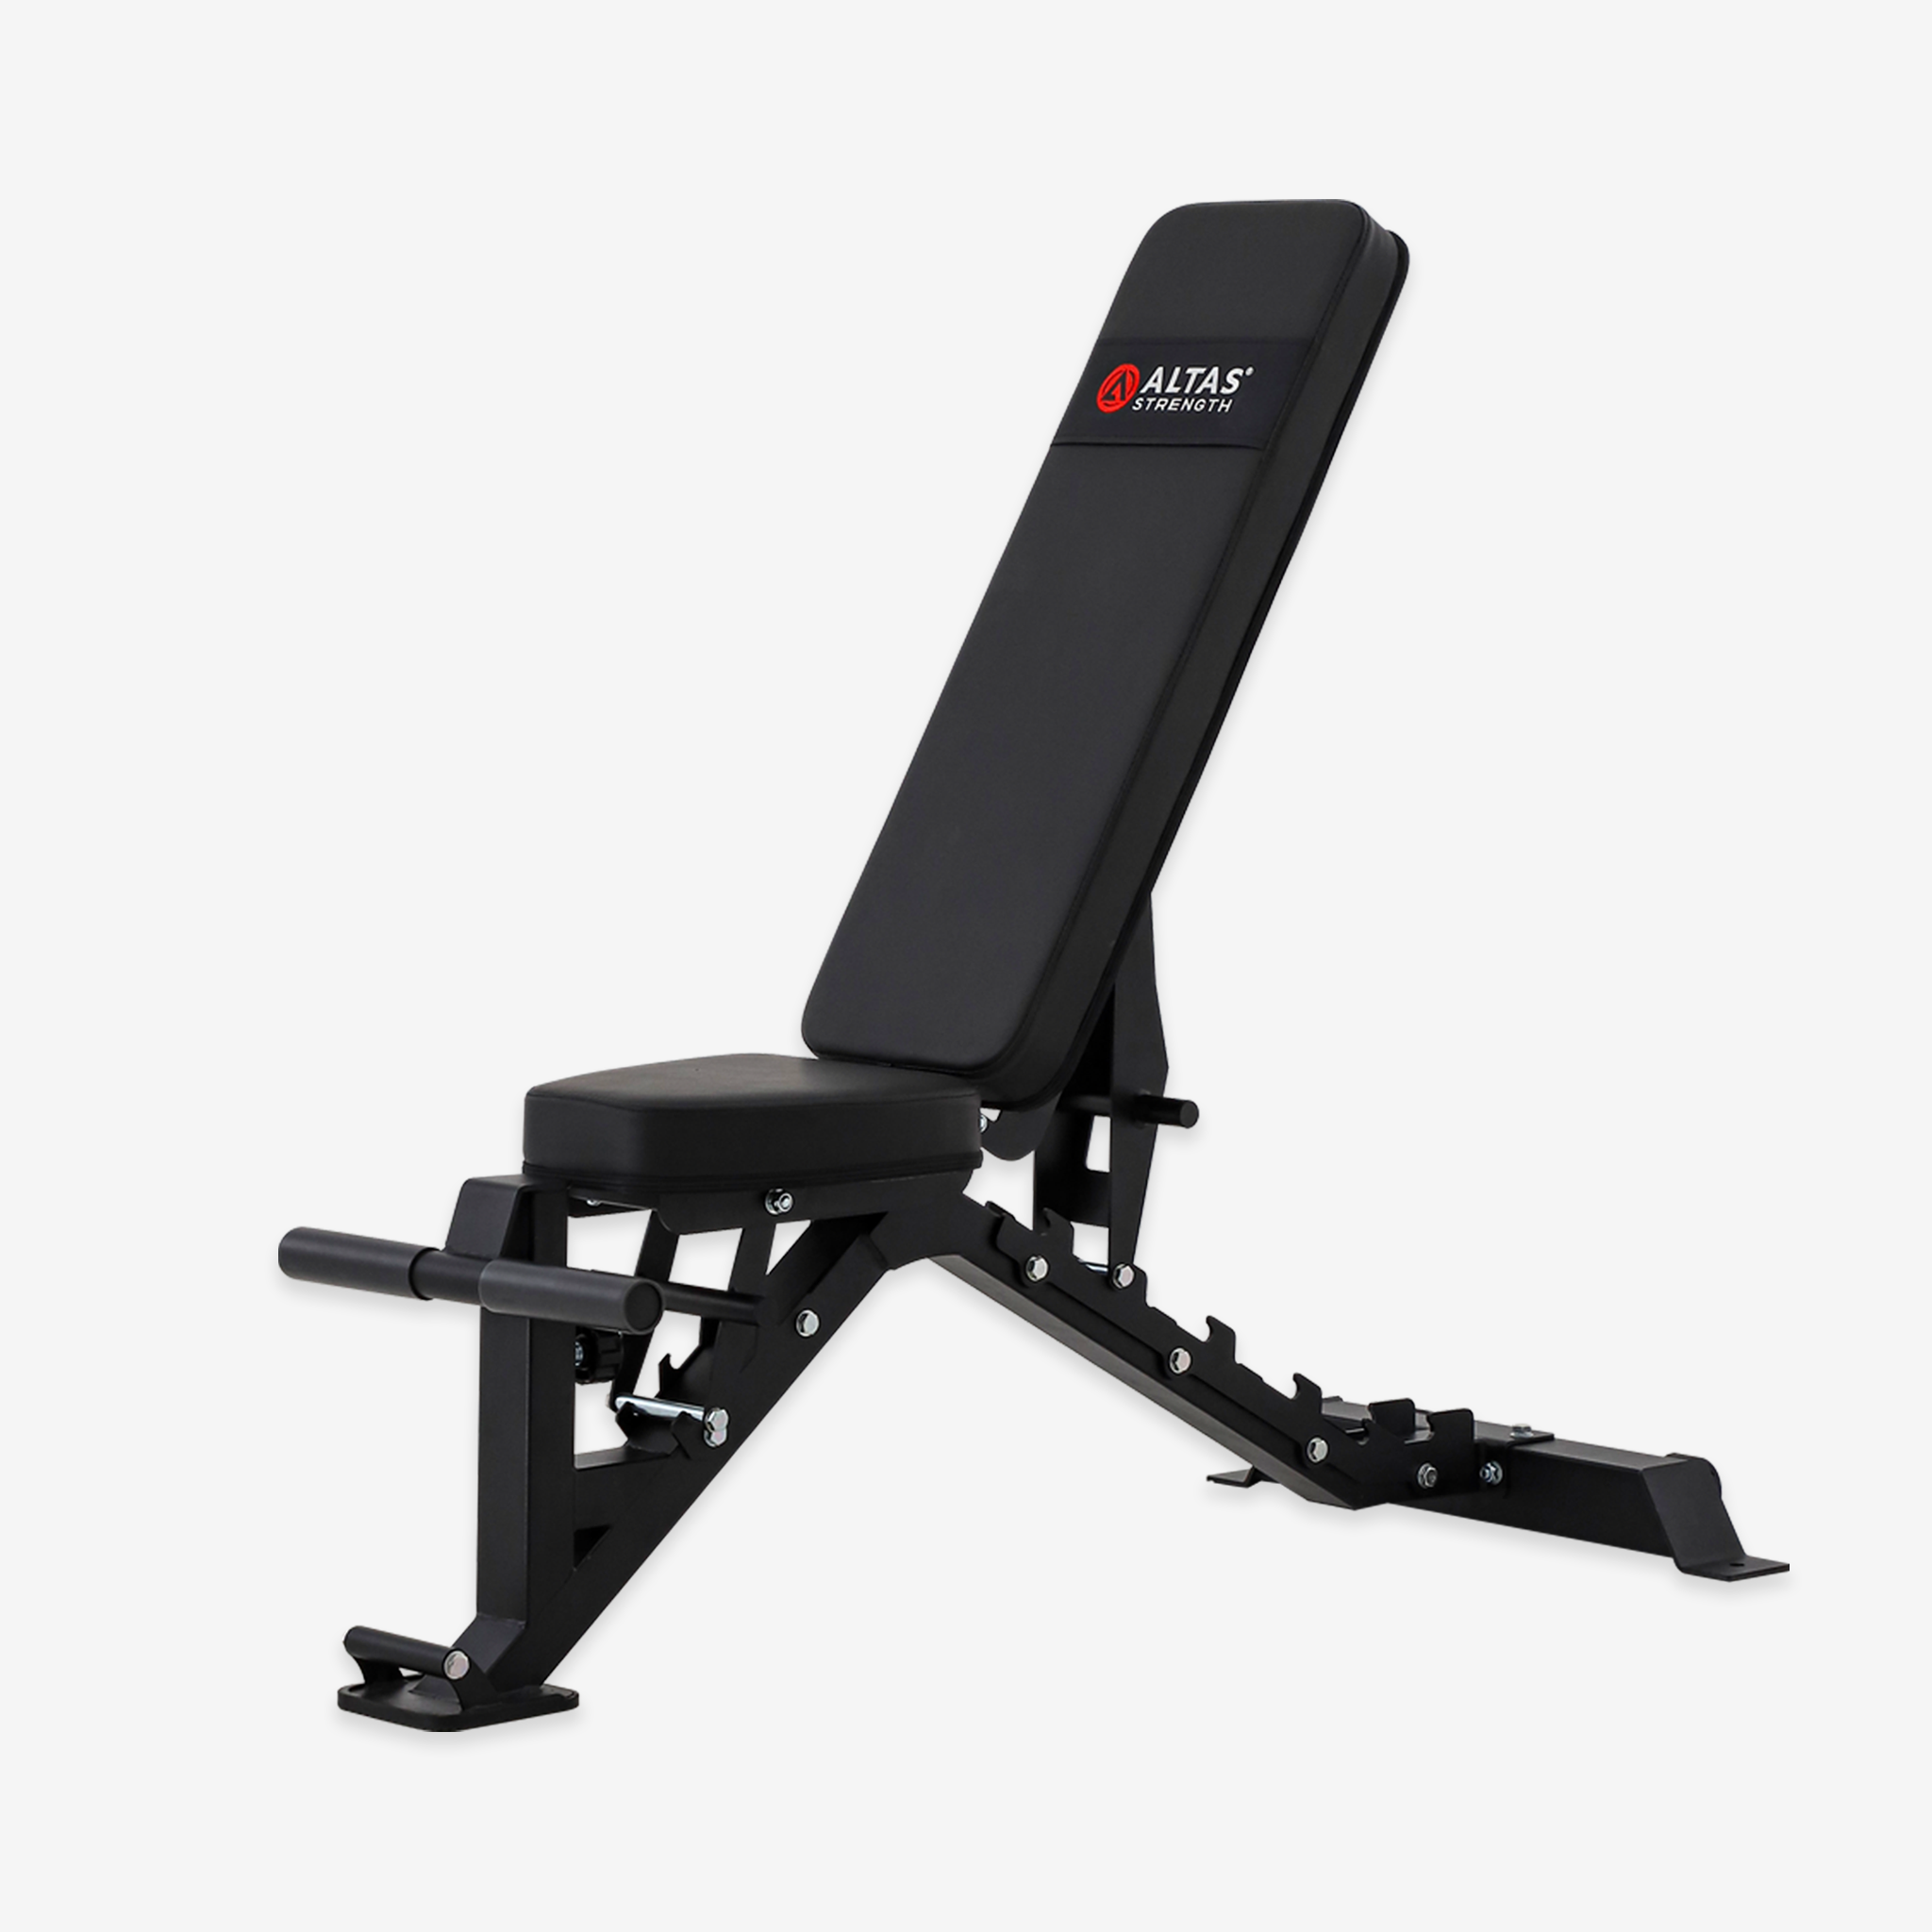 Altas Strength Home Gym Equipment Multi-functional Bench AL-4026